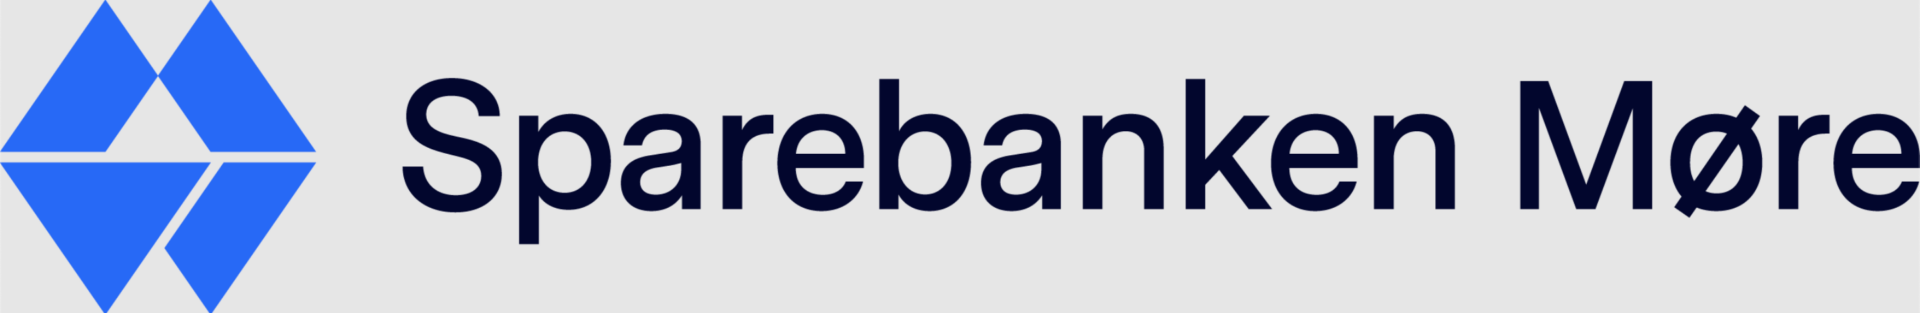 Sparebanken Møres logo